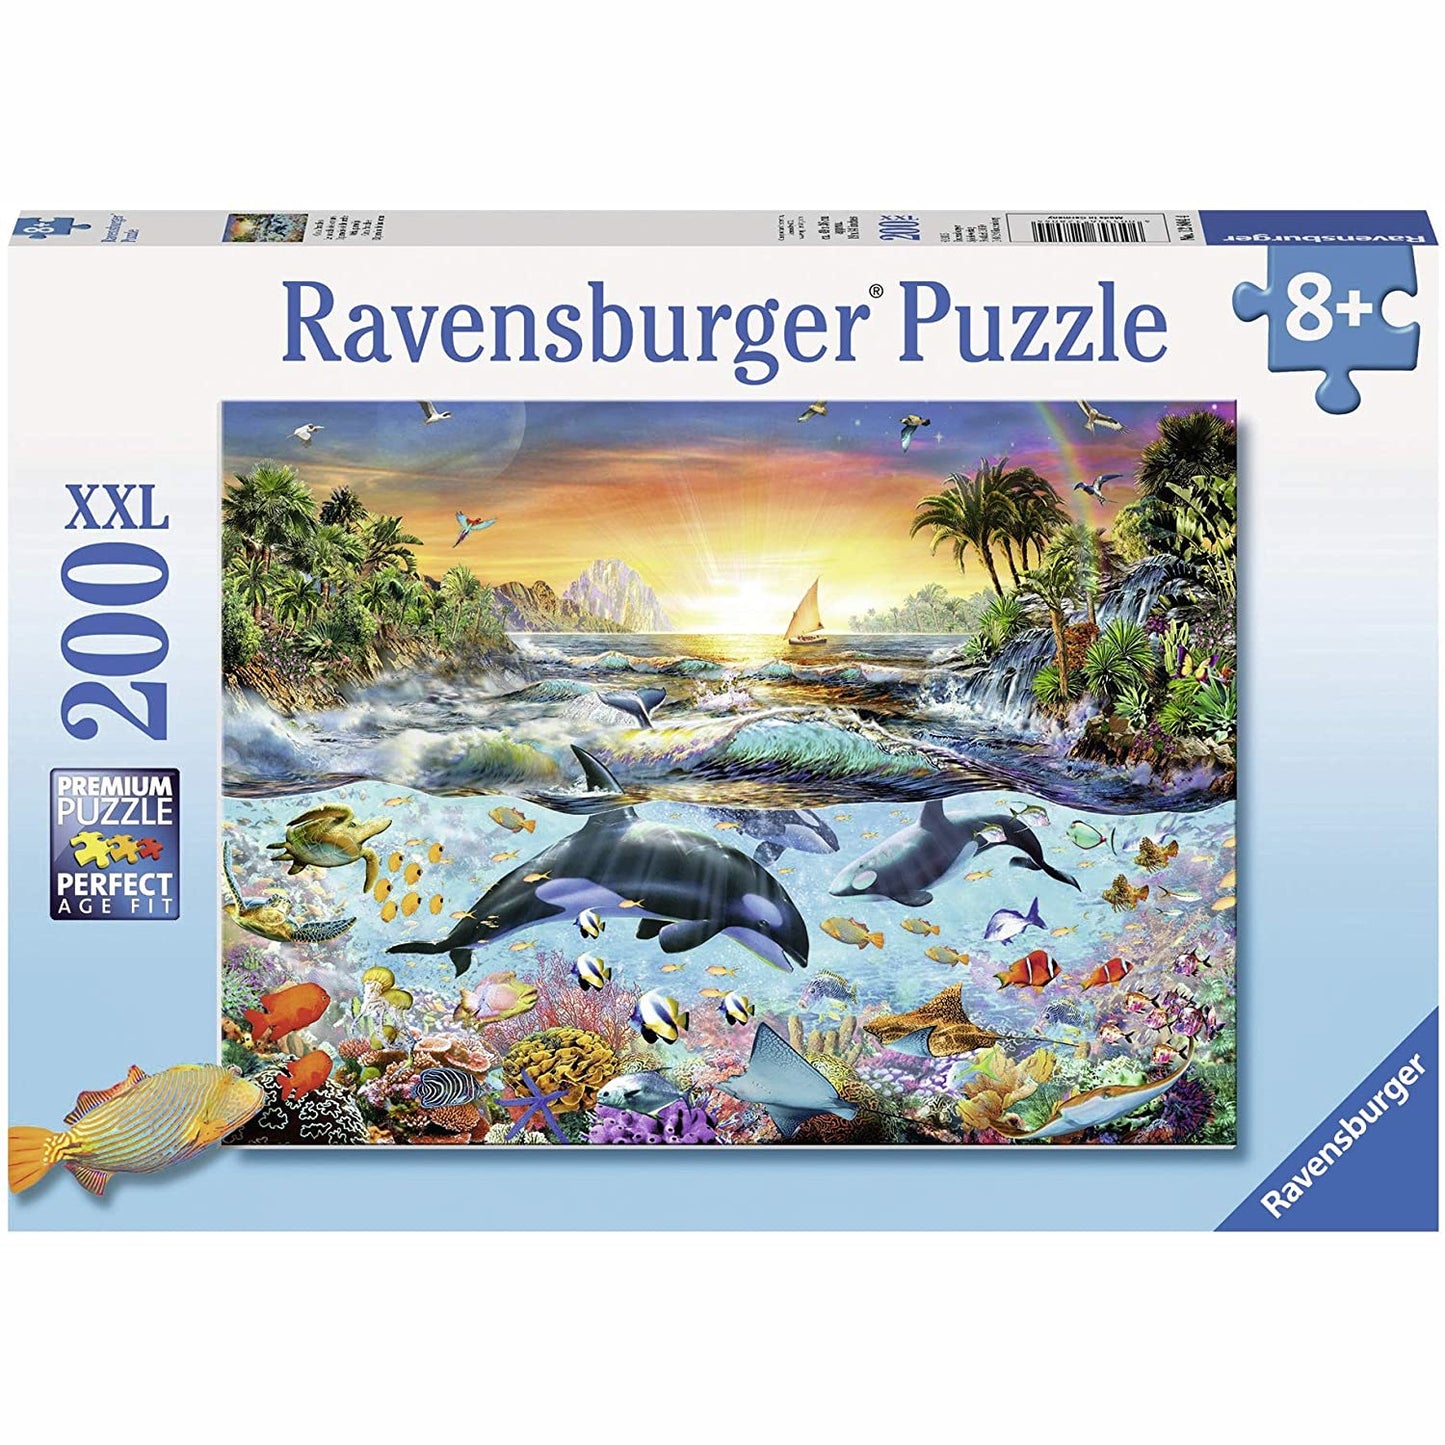 Ravensburger Puzzle Orca Paradise 200pc